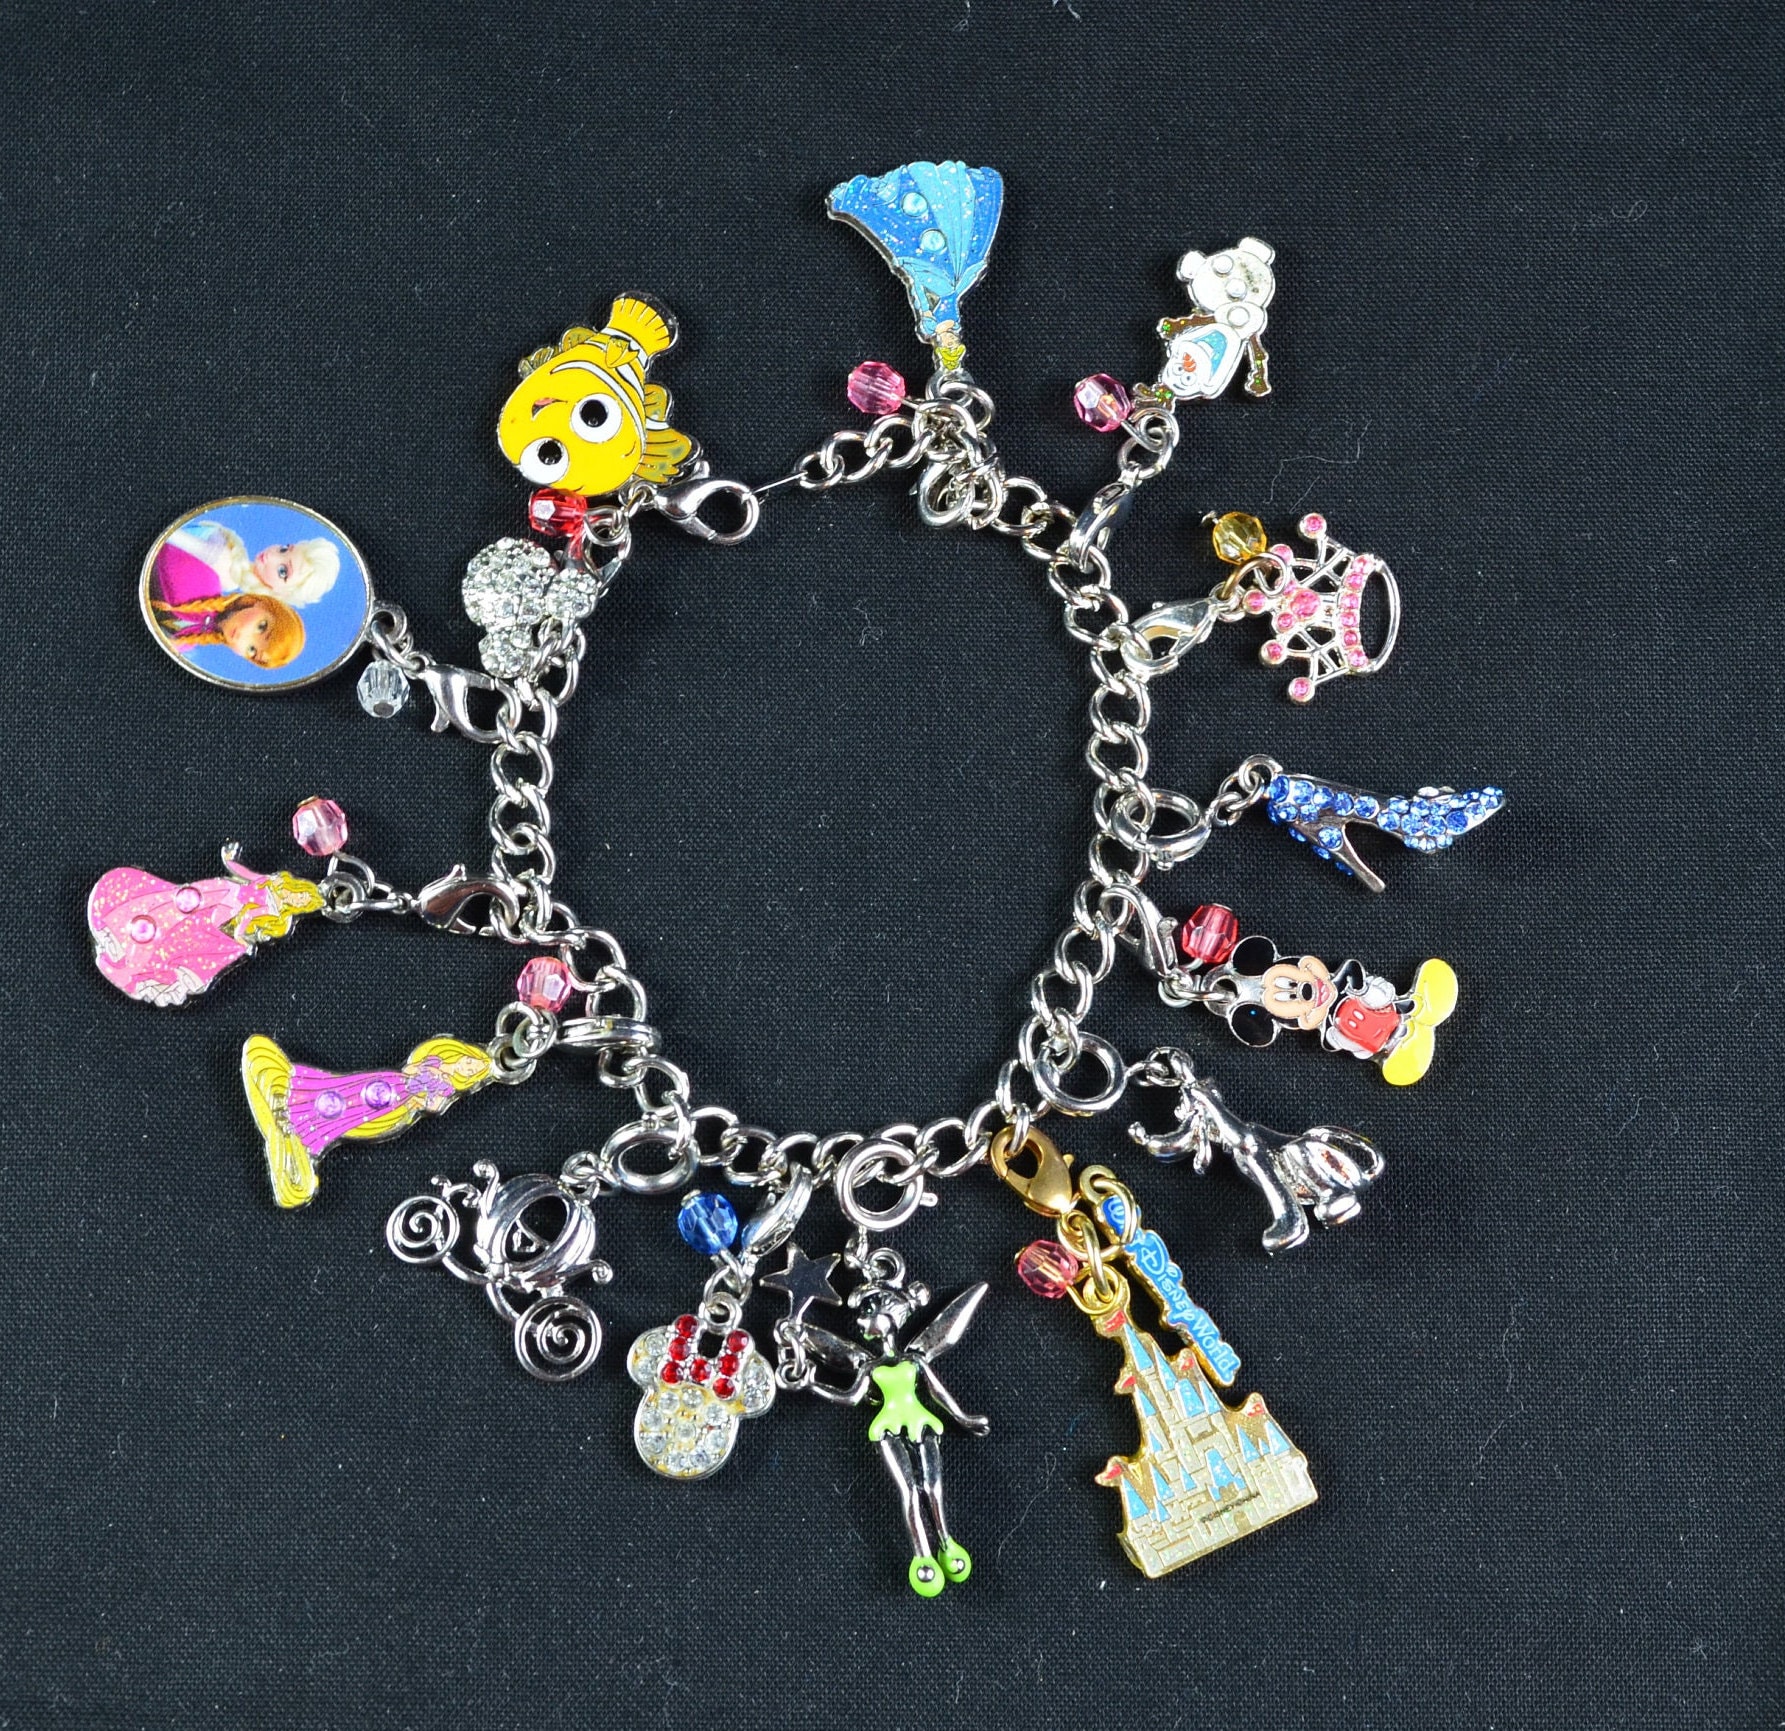 Sold at Auction: Pandora sterling charm bracelet from Disney park